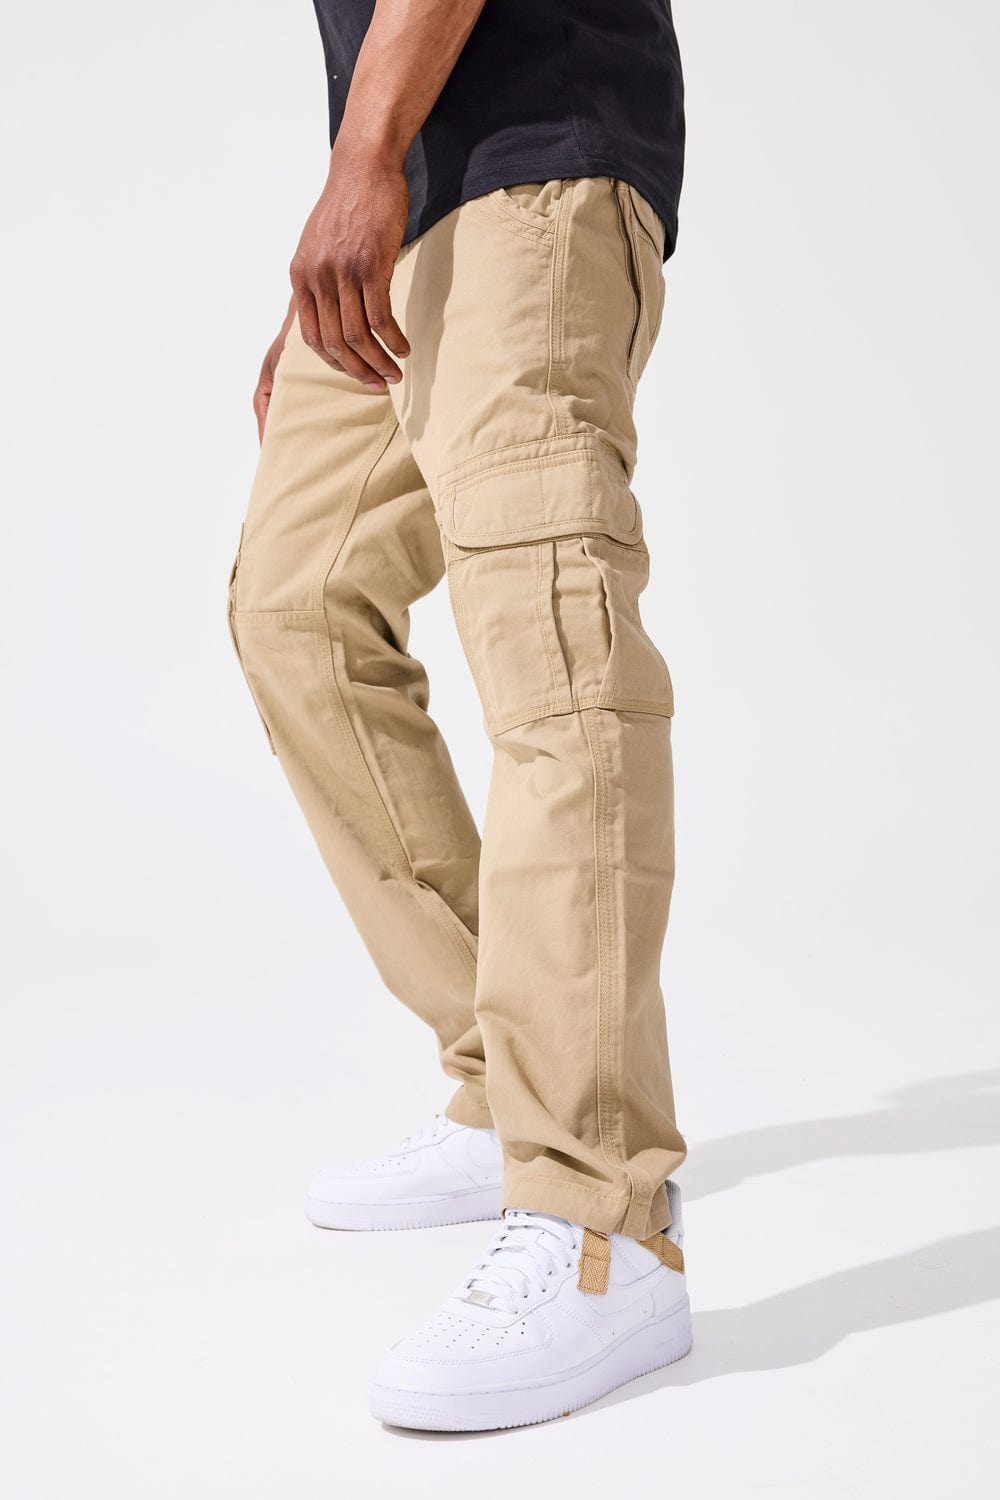 Jordan Craig Xavier - OG Cargo Pants (Khaki) 30/32 / Khaki